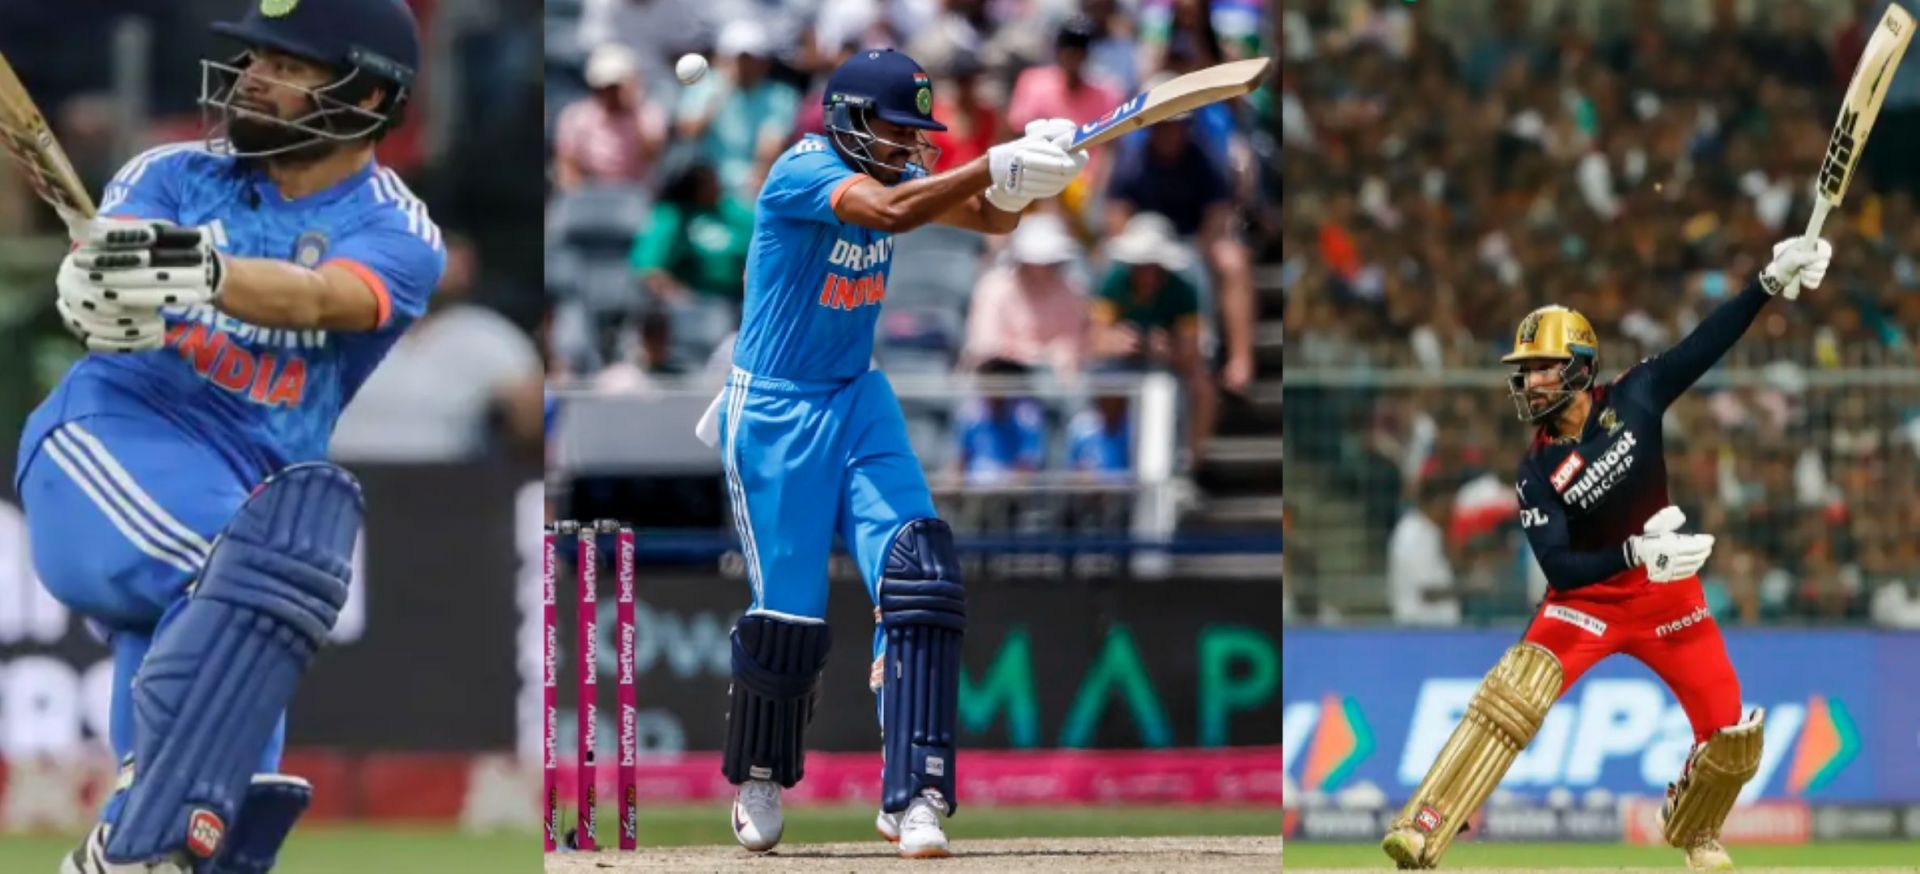 Both Padidar and Rinku make strong cases for ODI debuts